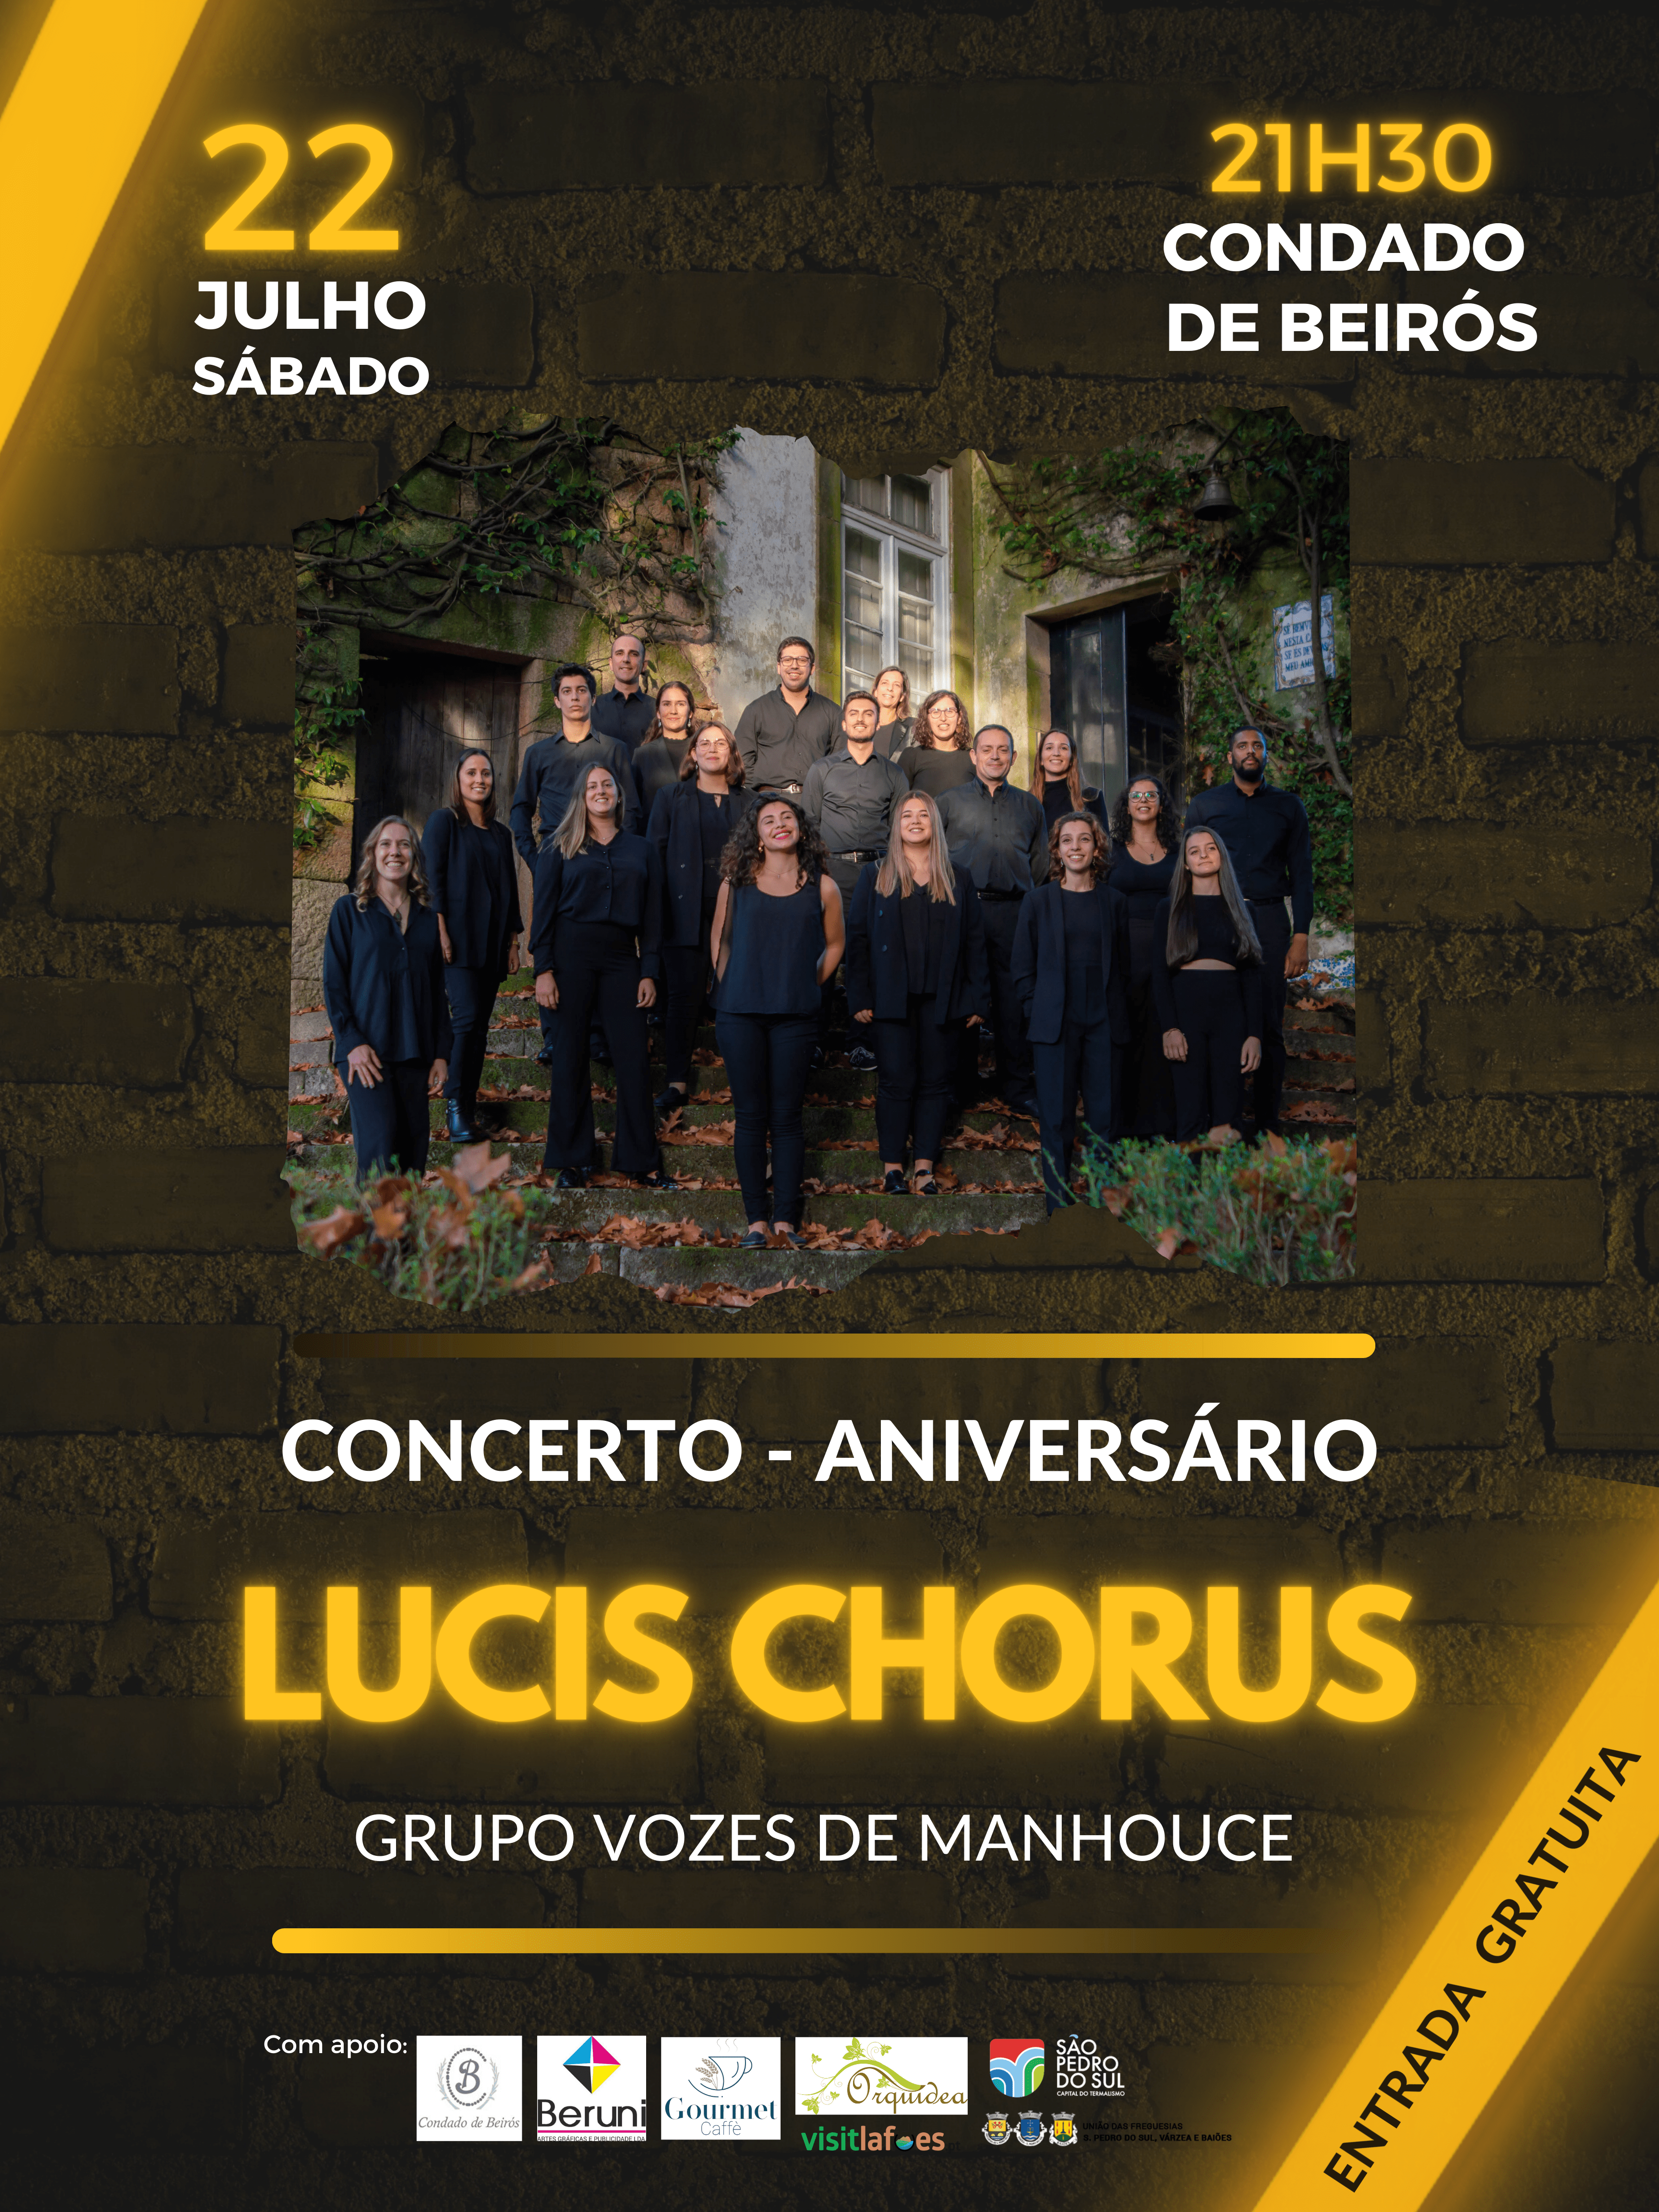 You are currently viewing Concerto de aniversário do Lucis Chorus